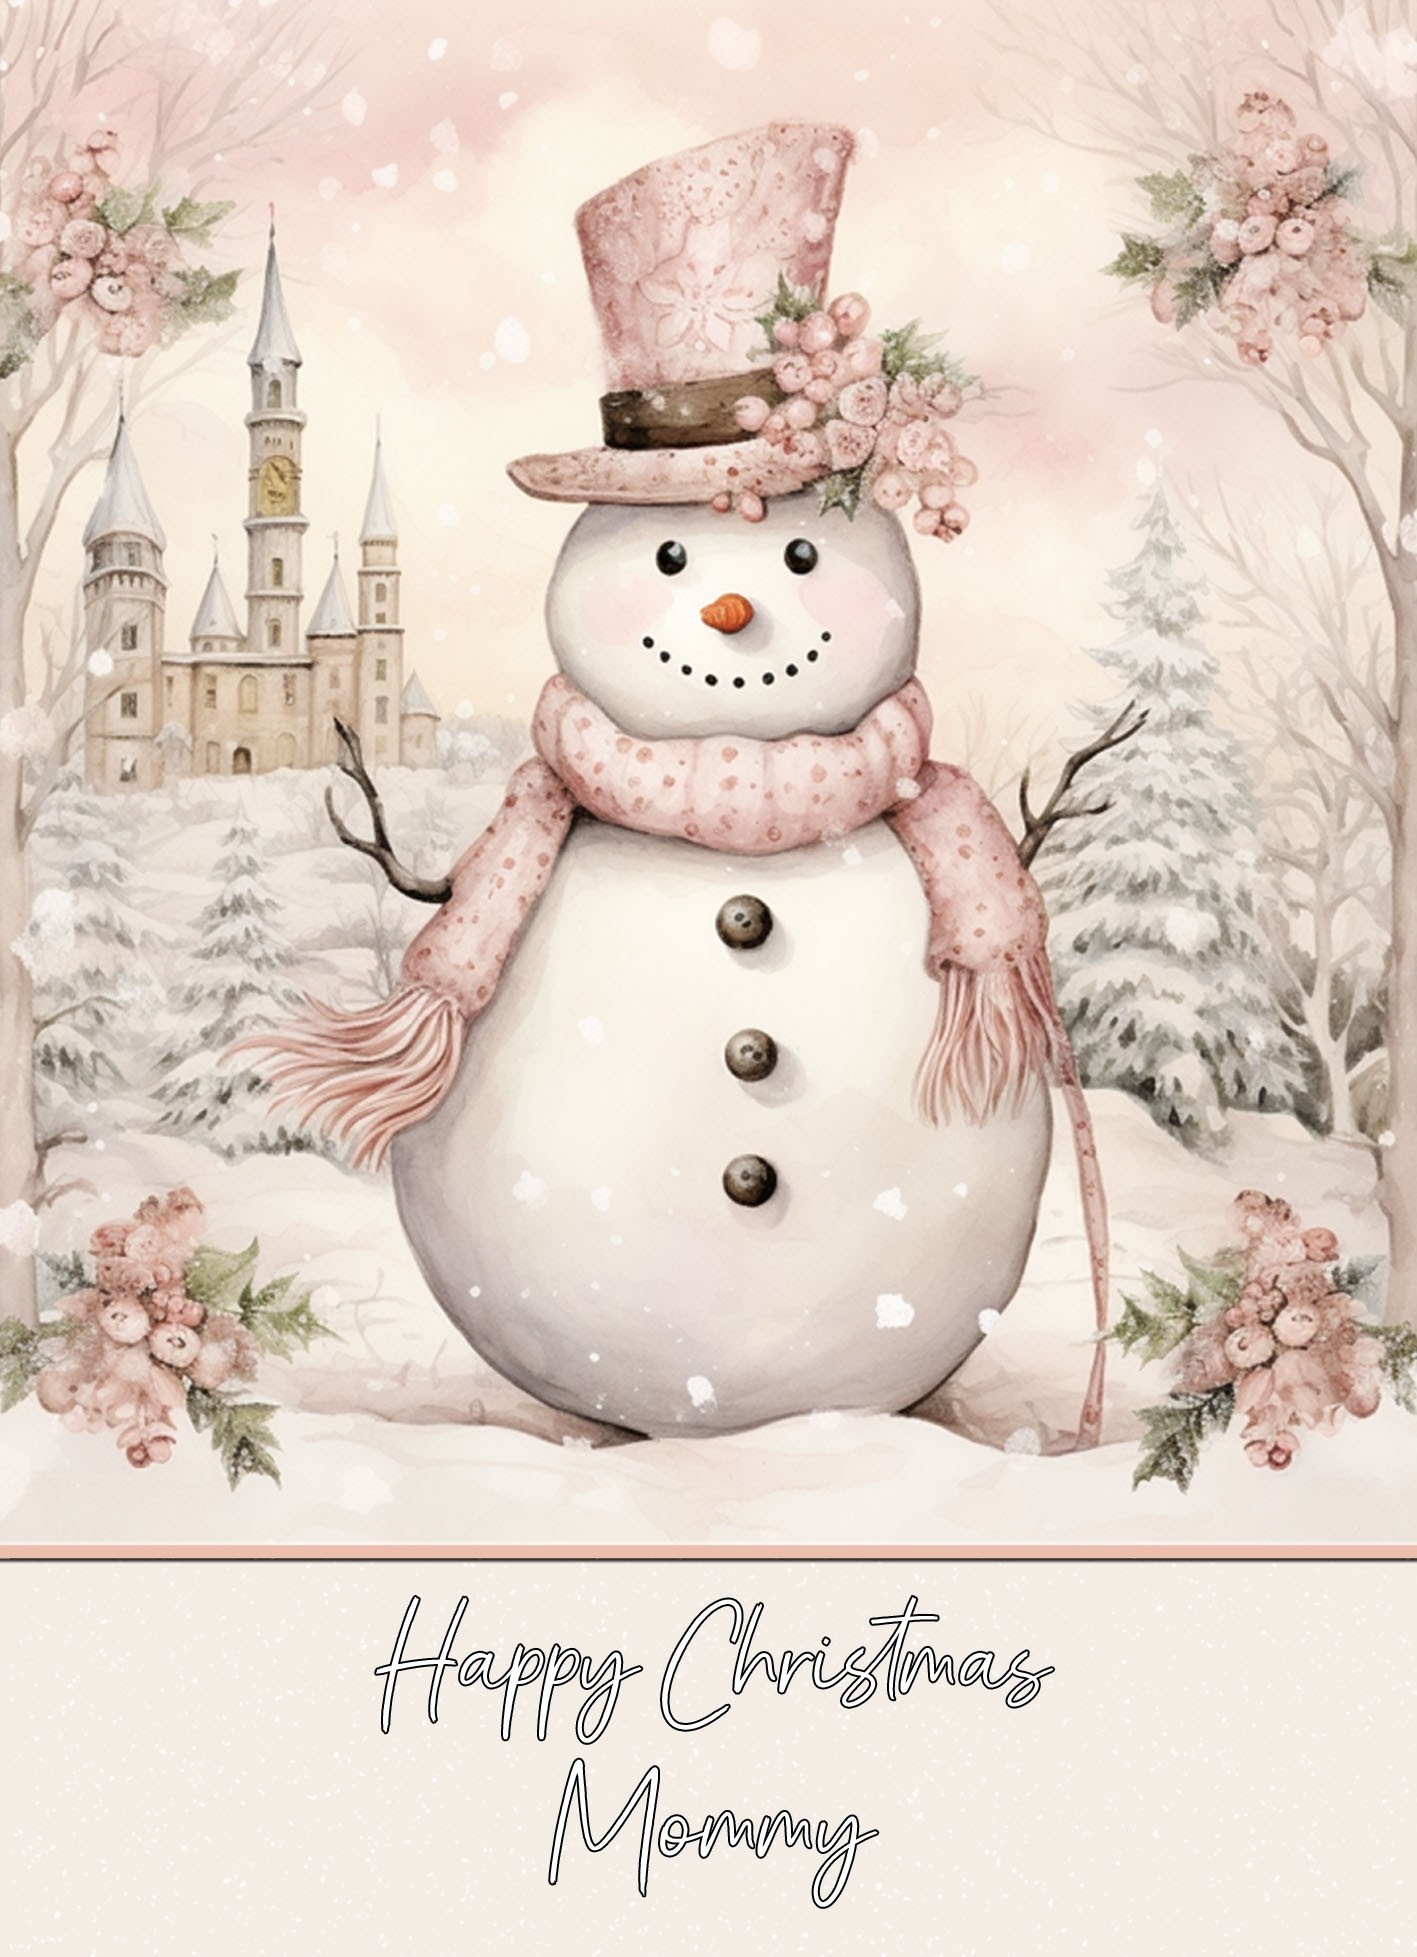 Snowman Art Christmas Card For Mommy (Design 2)